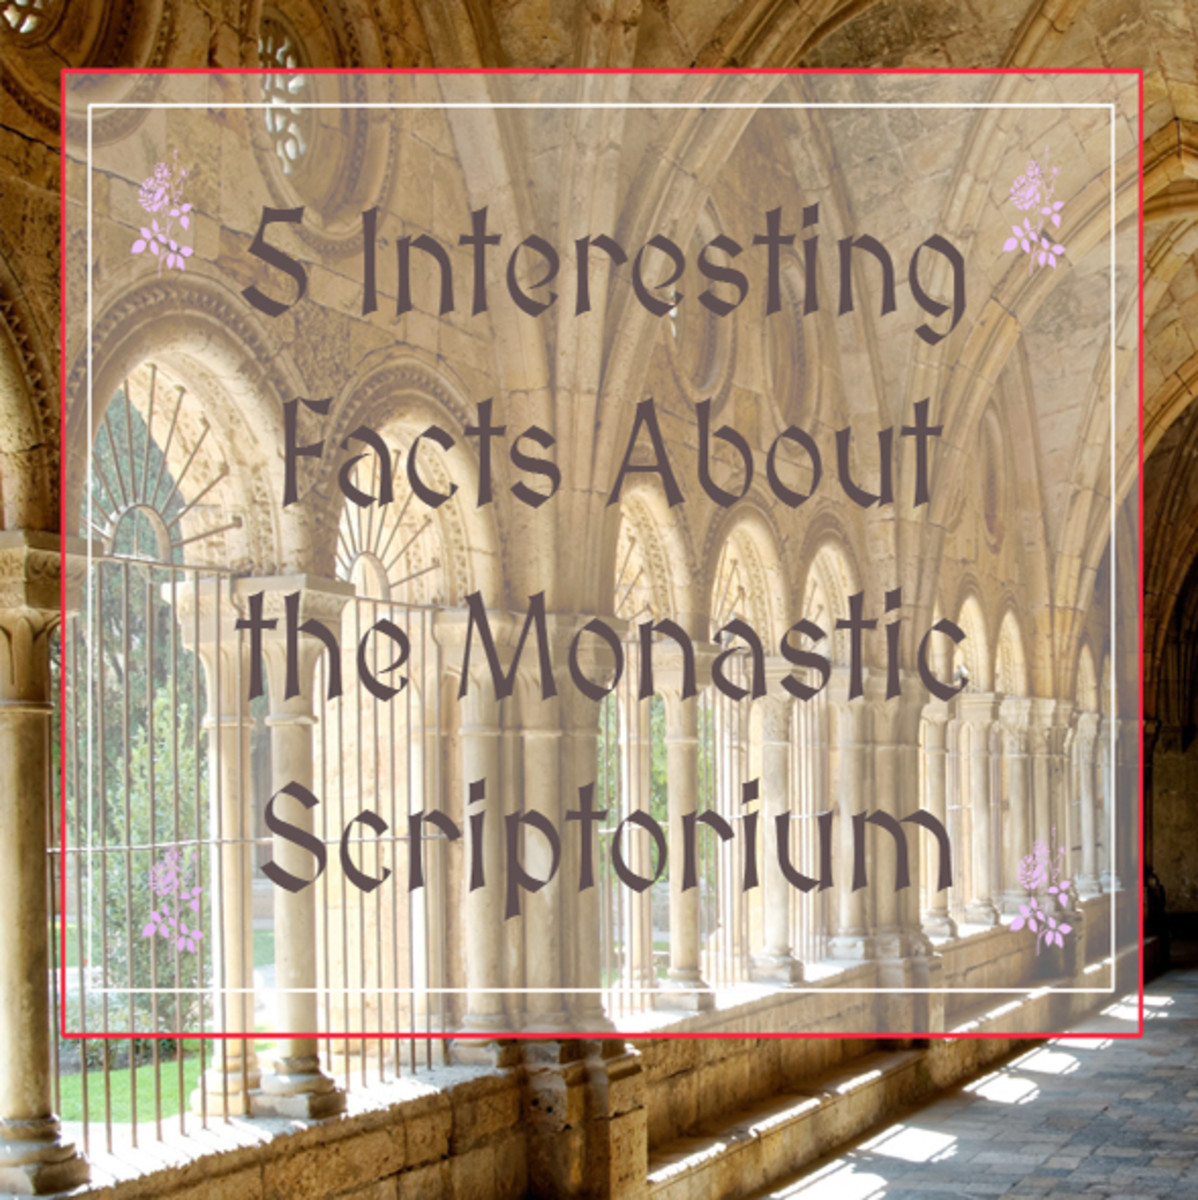 5 Interesting Facts About the Monastic Scriptorium